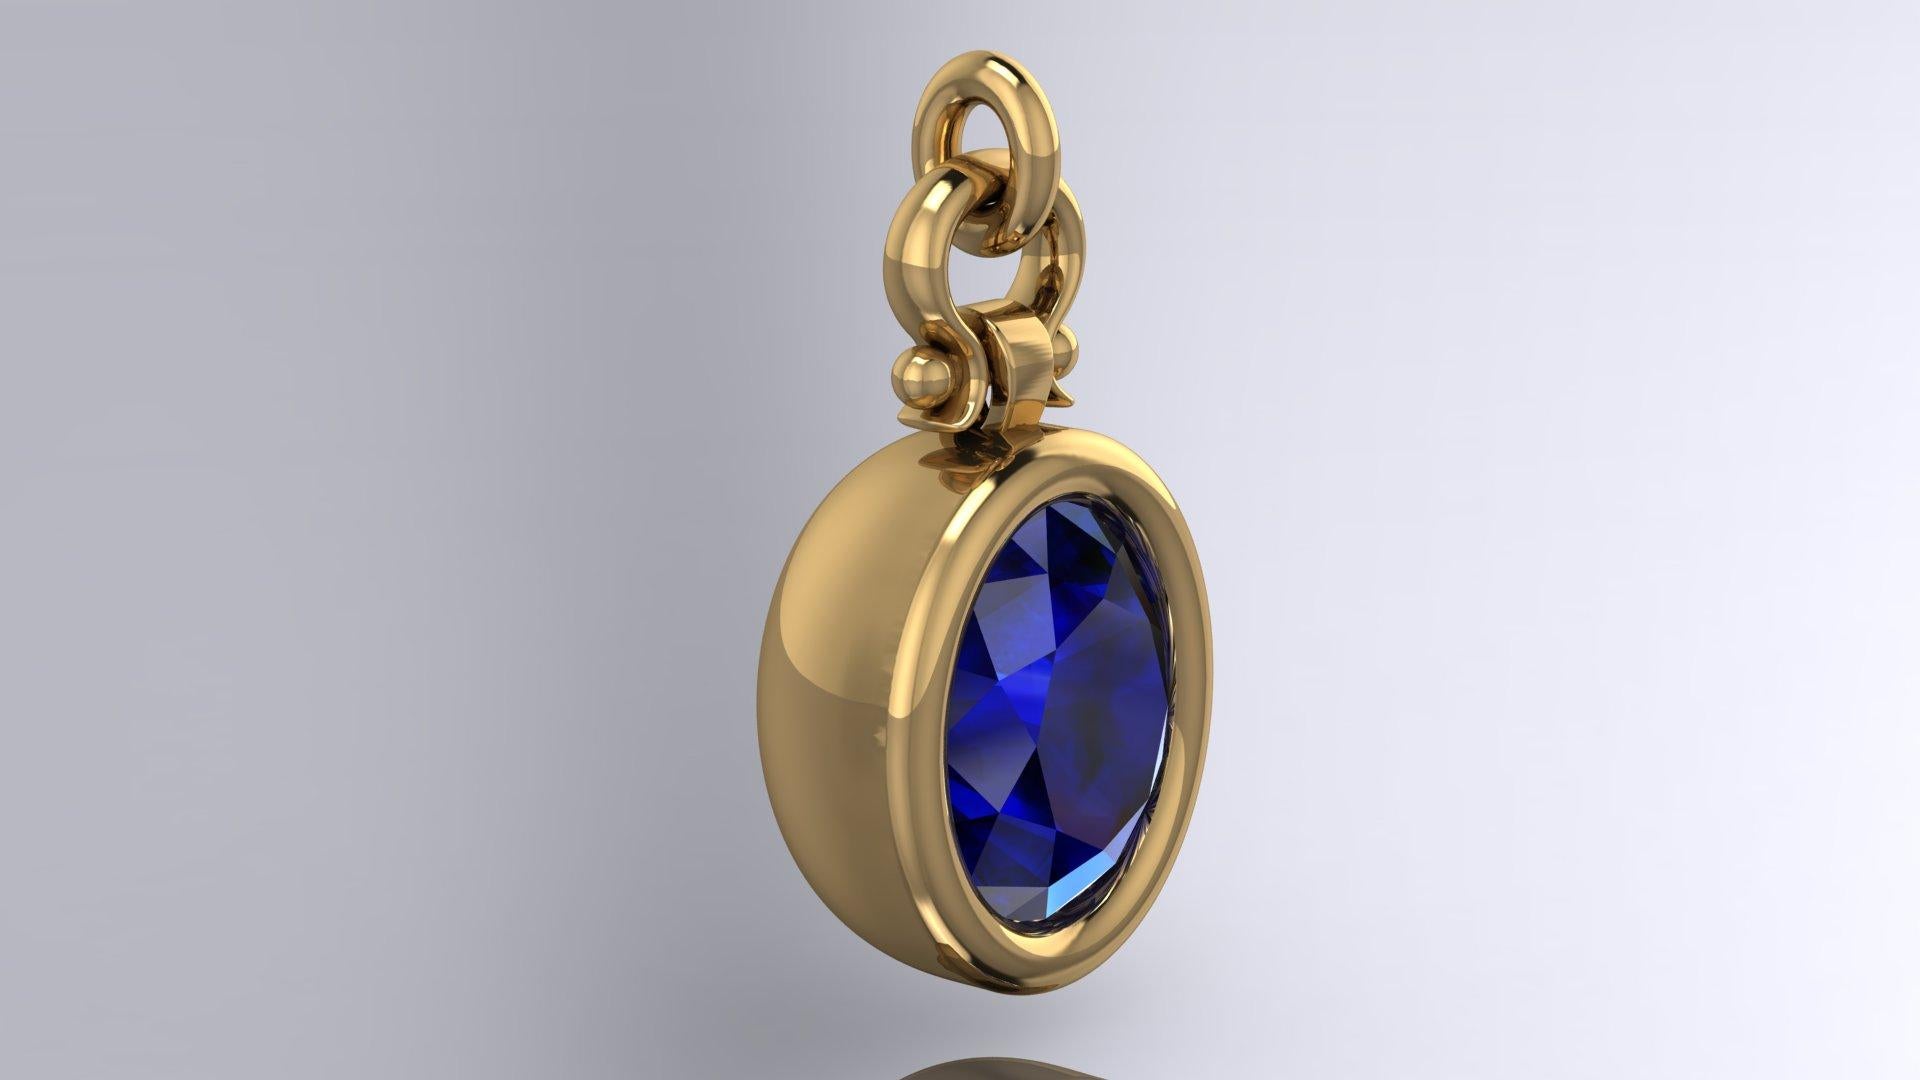 Contemporary Berberyn Certified 3.08 Carat Oval Blue Sapphire Custom Pendant Necklace in 18k For Sale